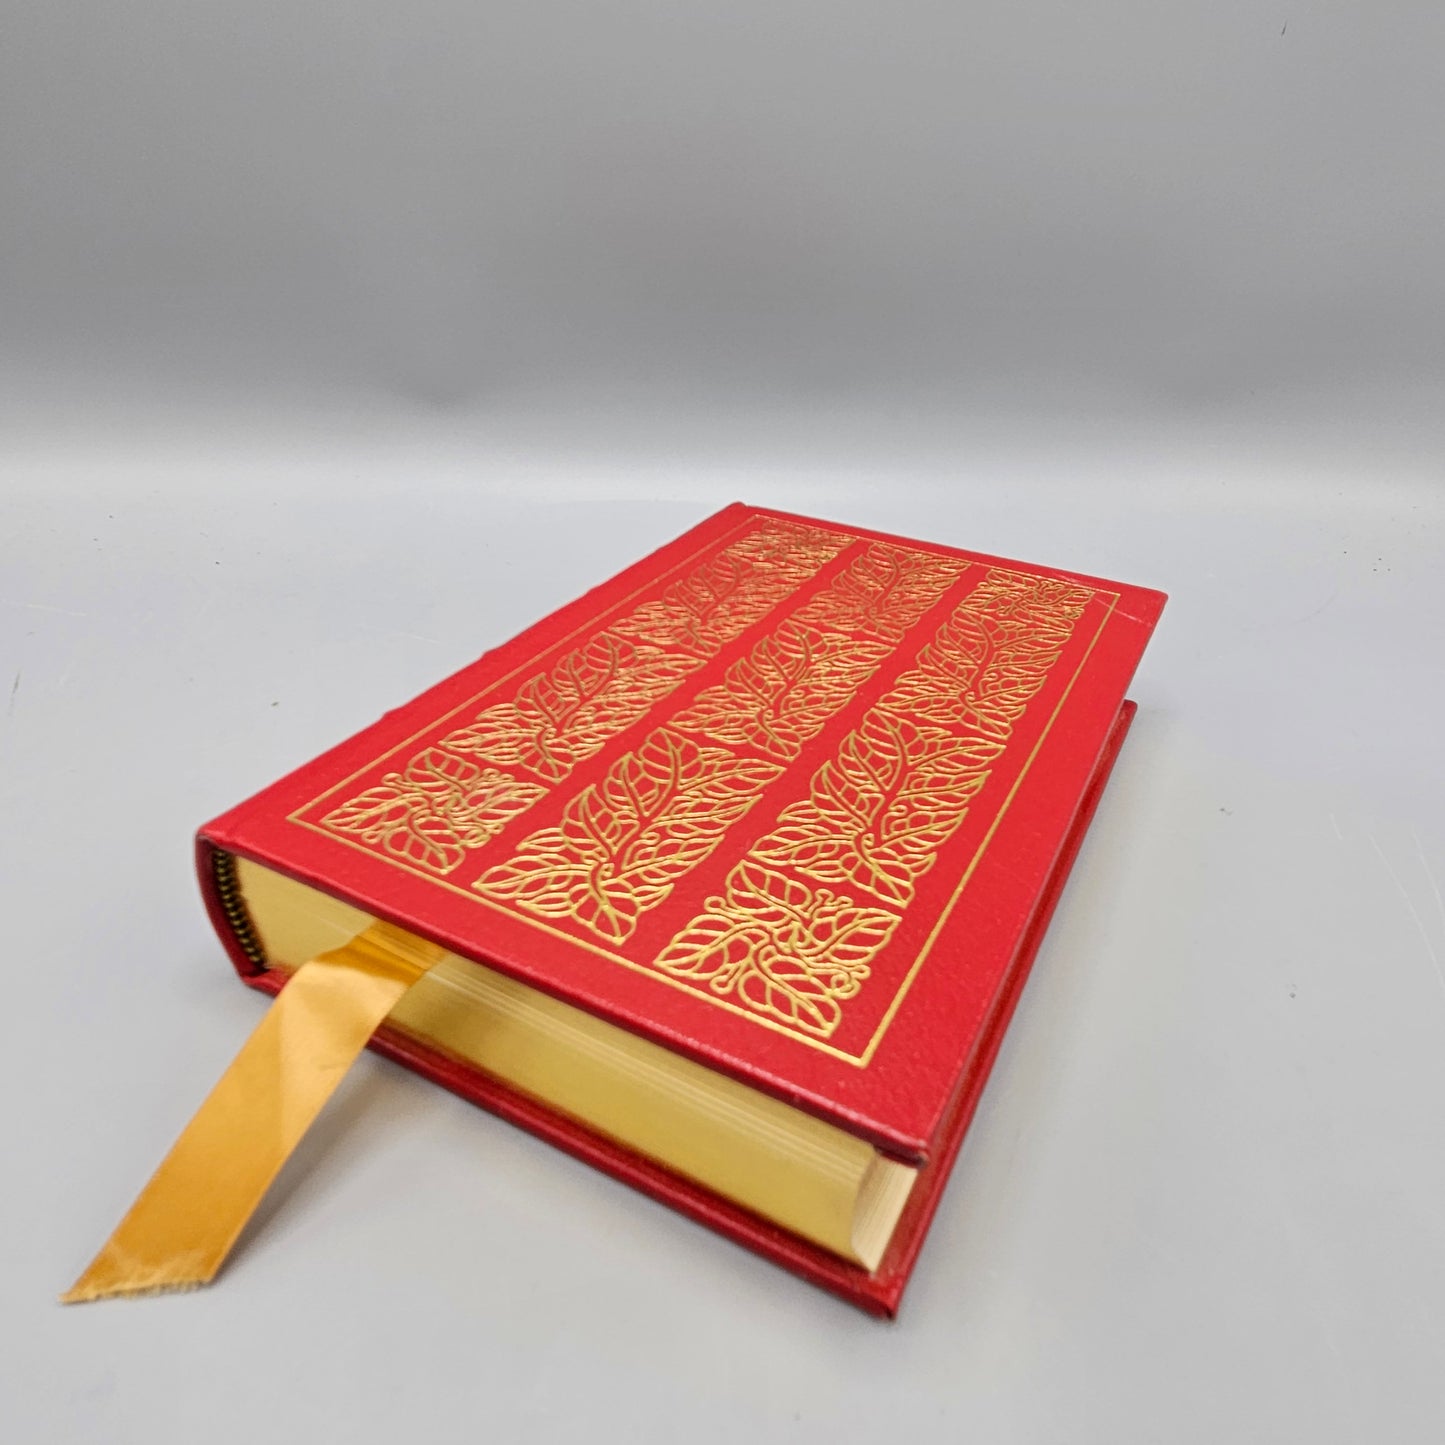 Leatherbound Book - Henry David Thoreau "Walden" Easton Press